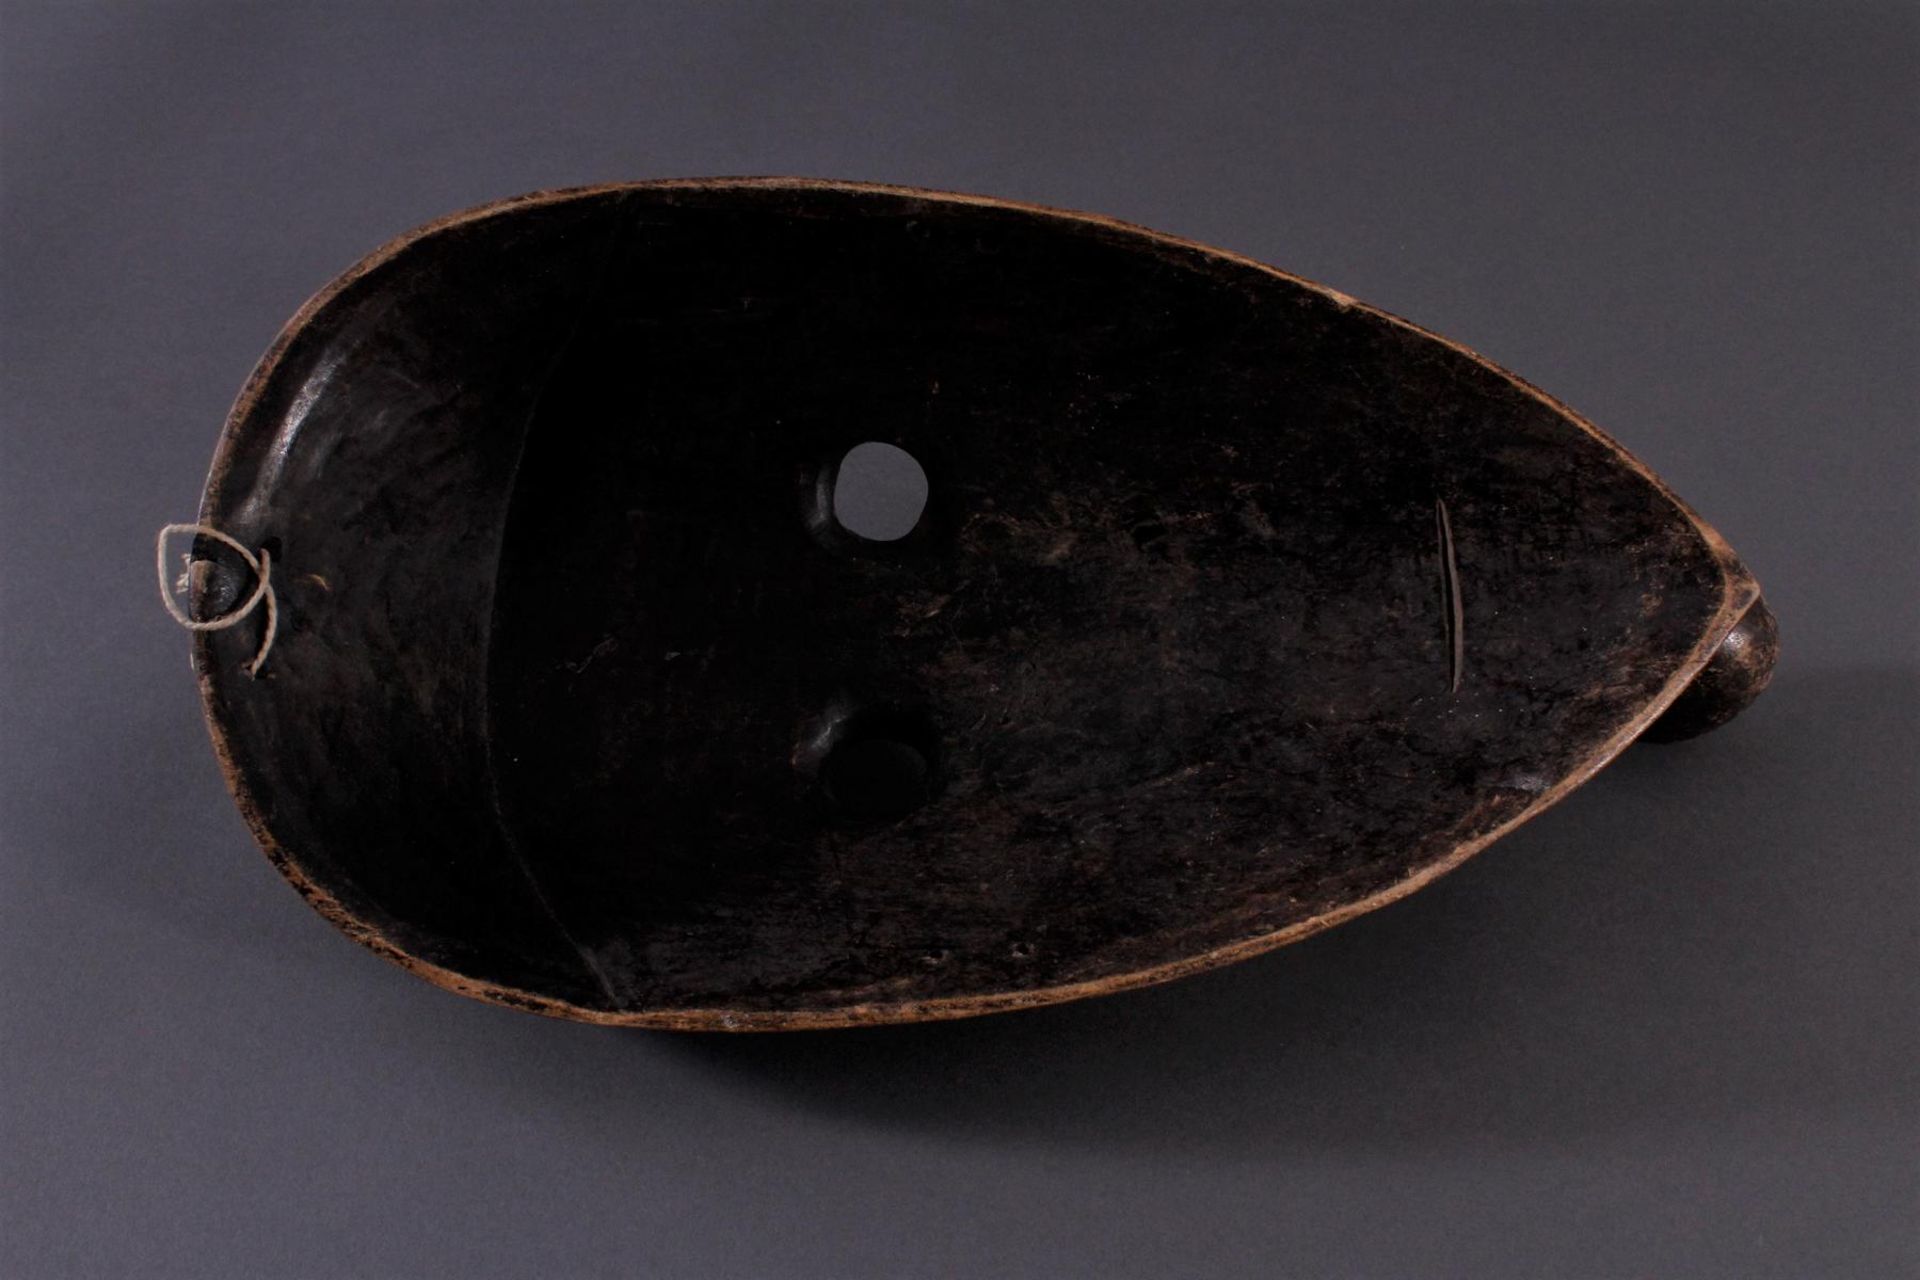 Antike Holzmaske der Dan, 1. Hälfte 20. Jh.Holz geschnitzt, "Pfeifenraucher", dunkle Patina, - Bild 4 aus 4